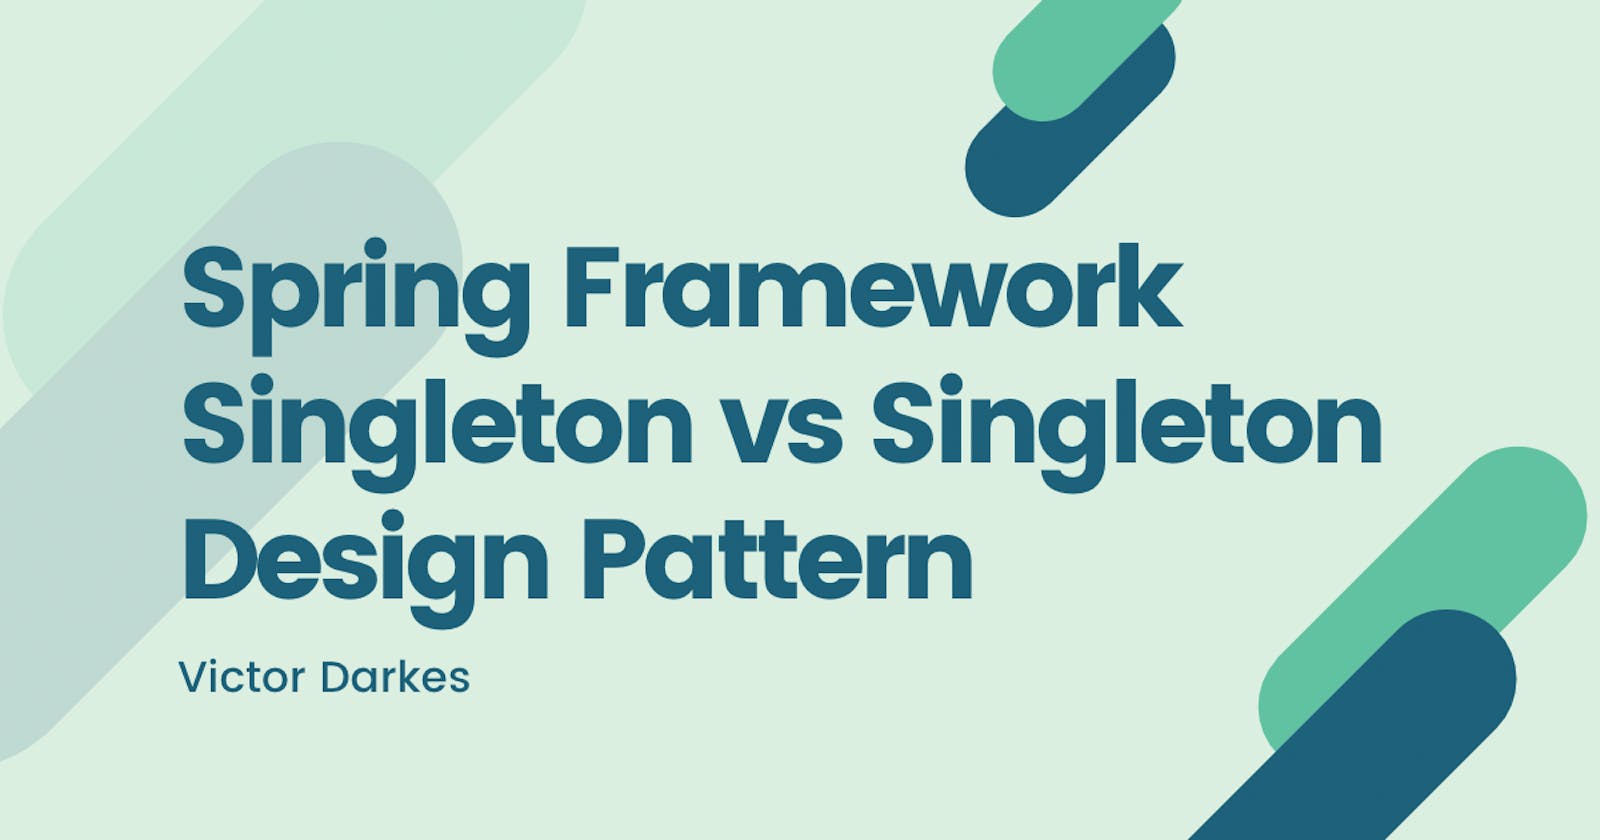 Spring Framework Singleton vs Singleton Design Pattern